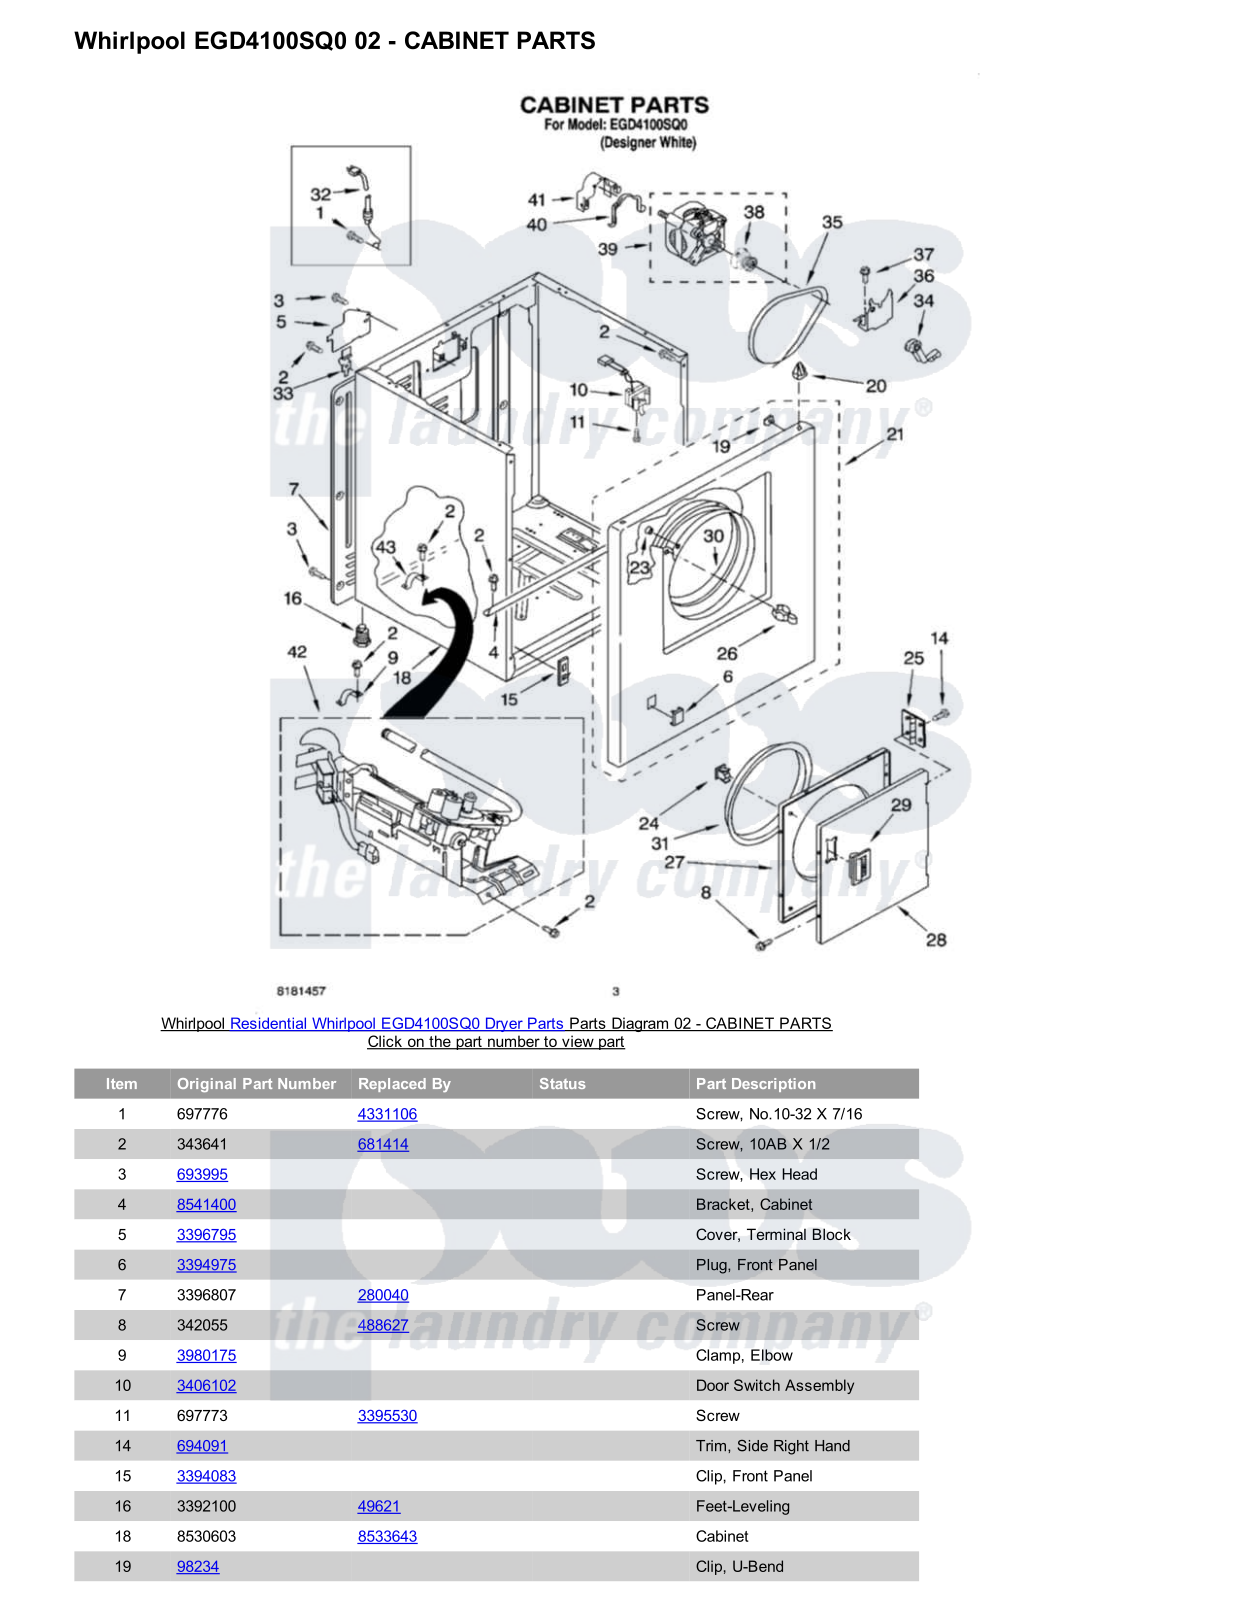 Whirlpool EGD4100SQ0 Parts Diagram